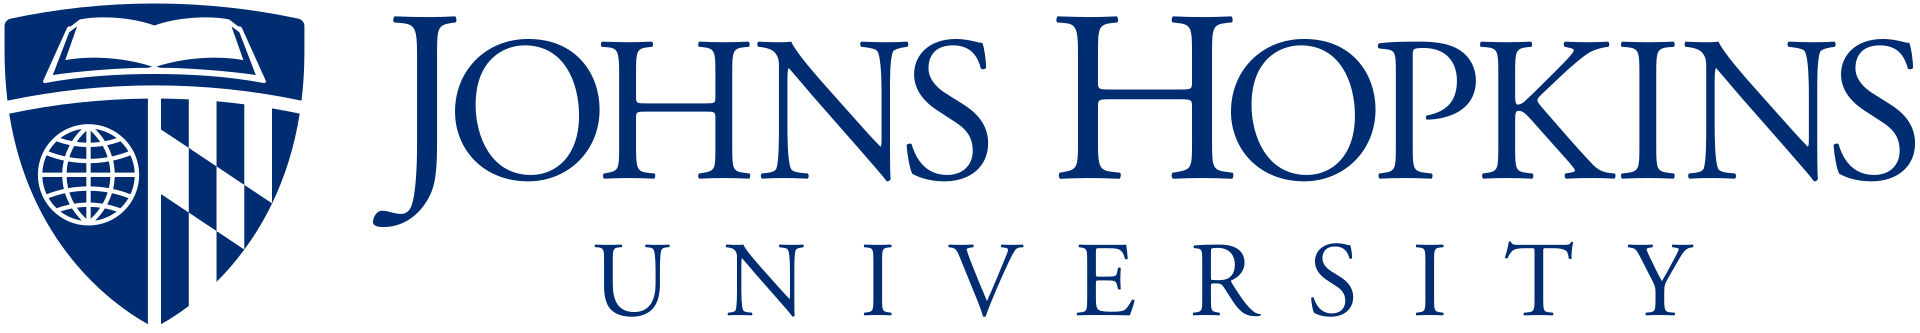 Johns Hopkins University logo, By Source, Fair use, http://en.维基百科.org/w/index.php?curid = 52649215 "